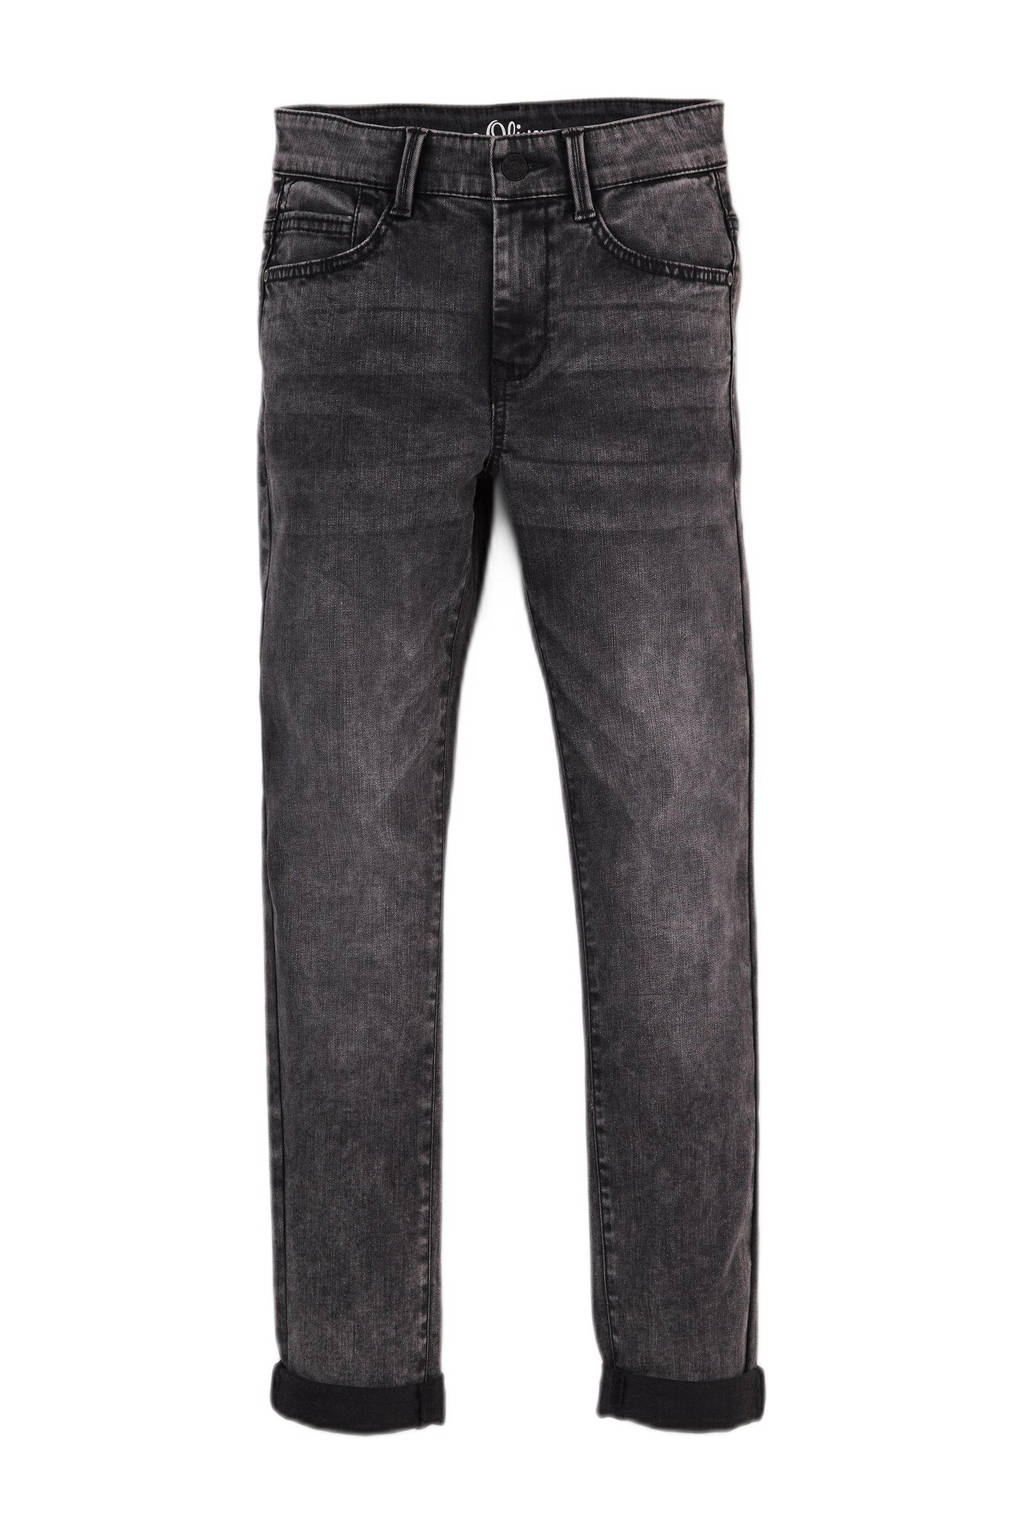 s.Oliver skinny jeans donkergrijs, Donkergrijs